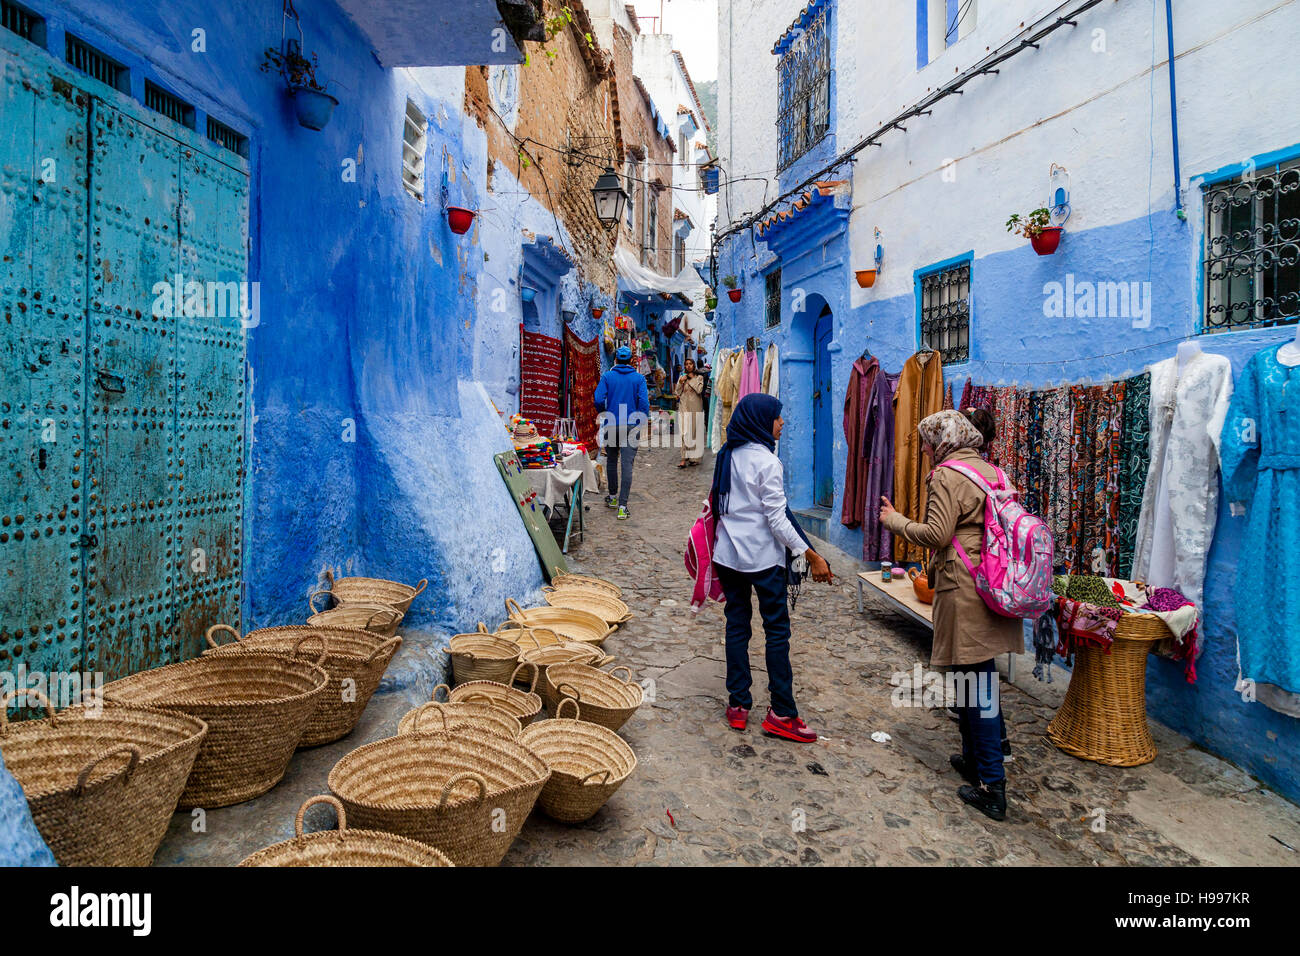 La vie de la rue de la médina, Chefchaouen, Maroc Banque D'Images